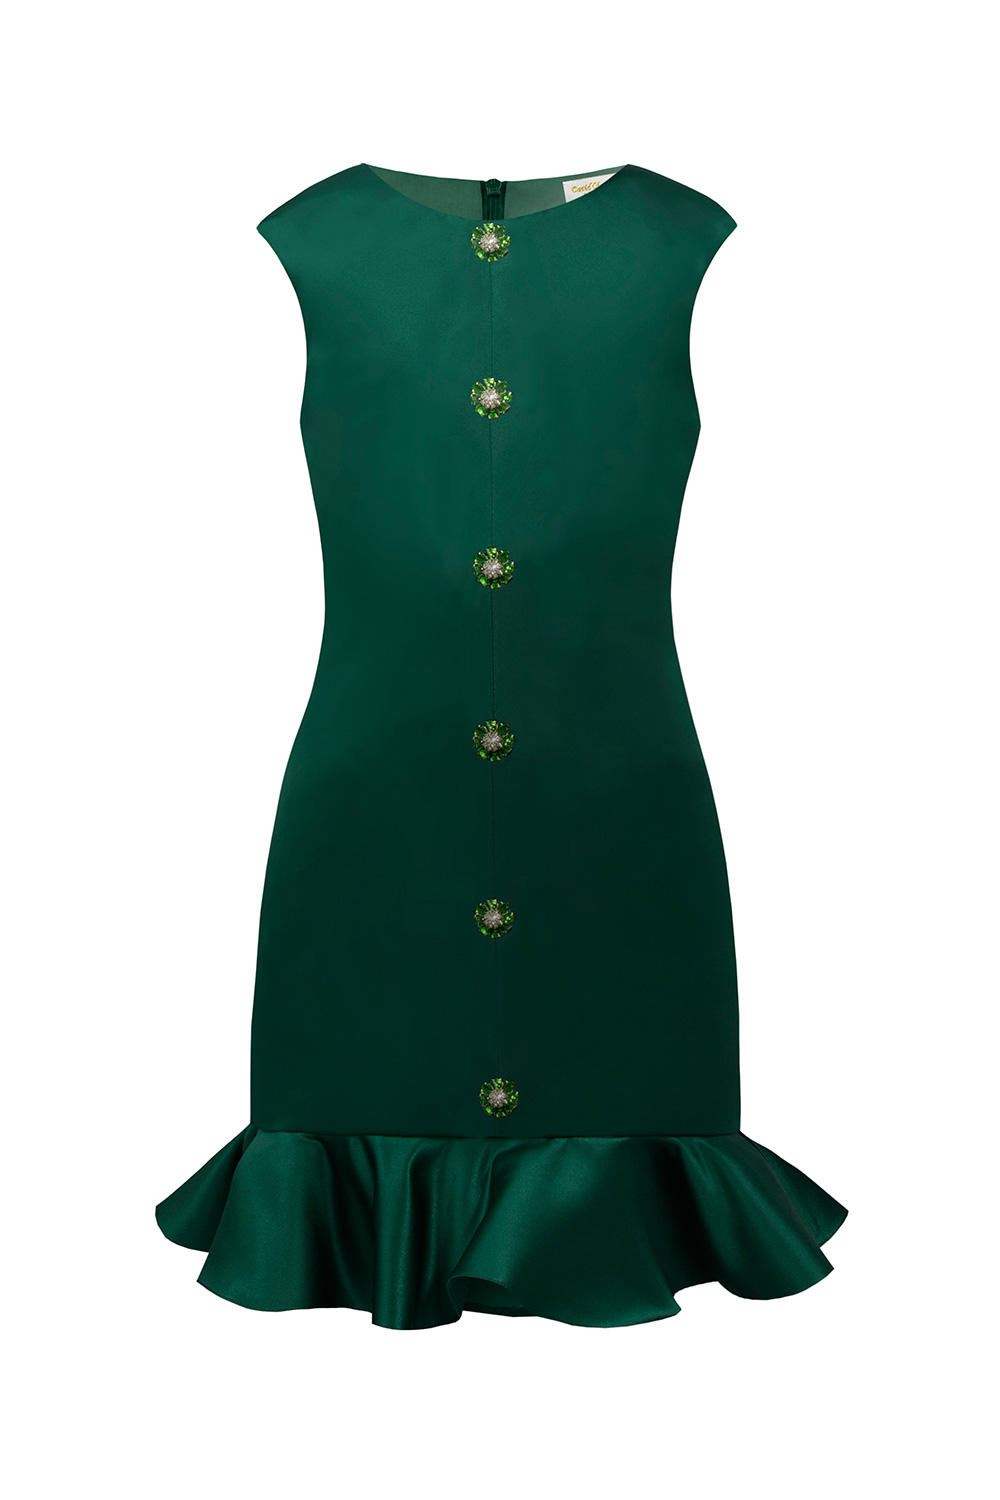 green satin party dress